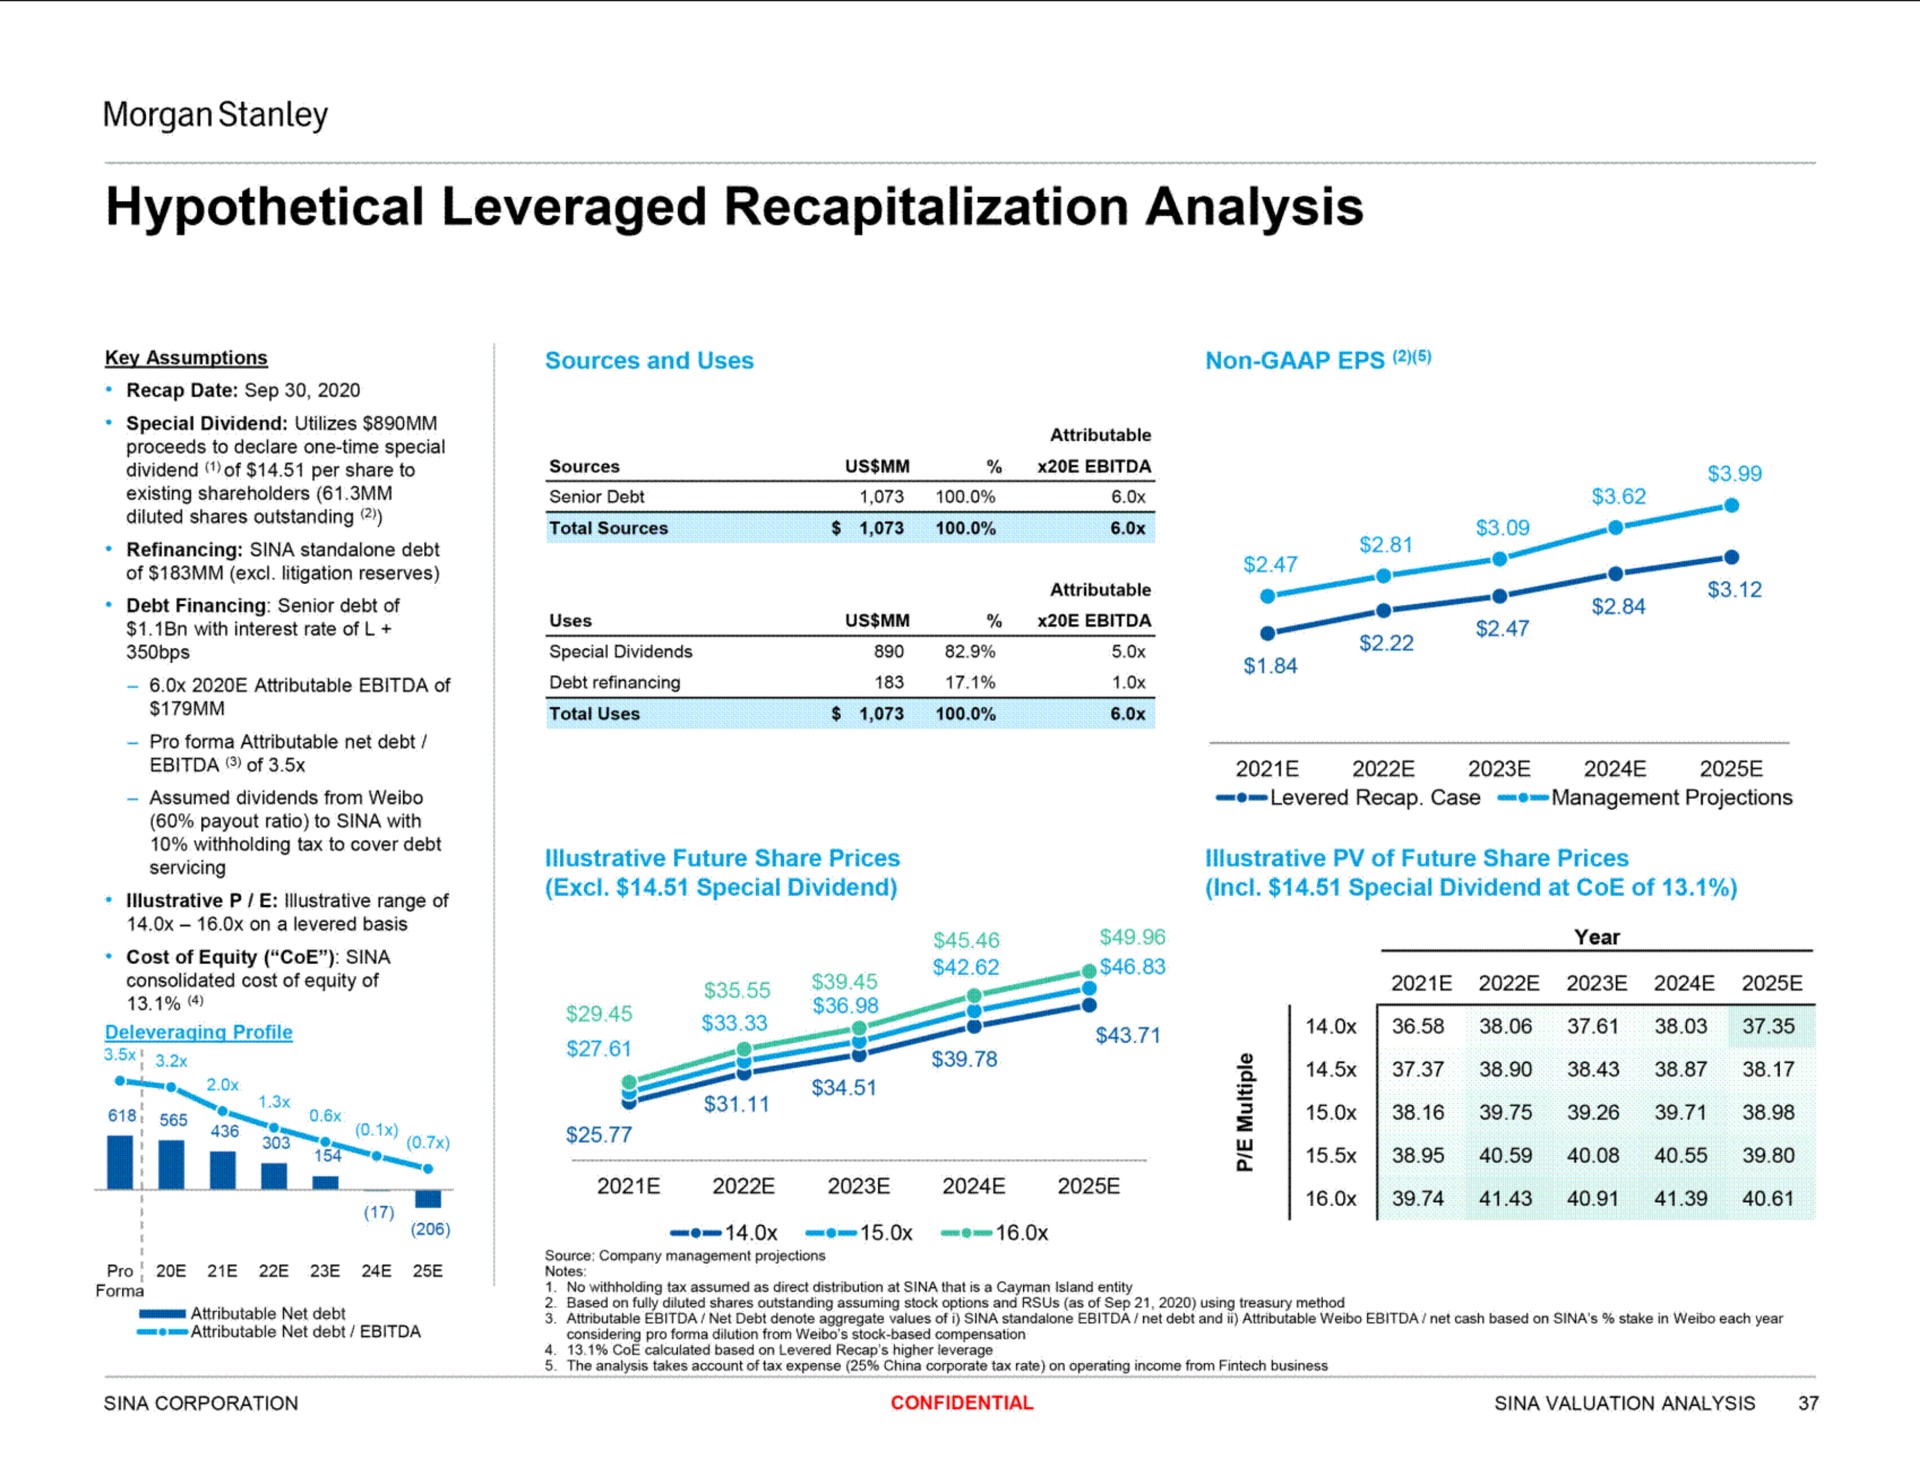 hypothetical leveraged recapitalization analysis | Morgan Stanley